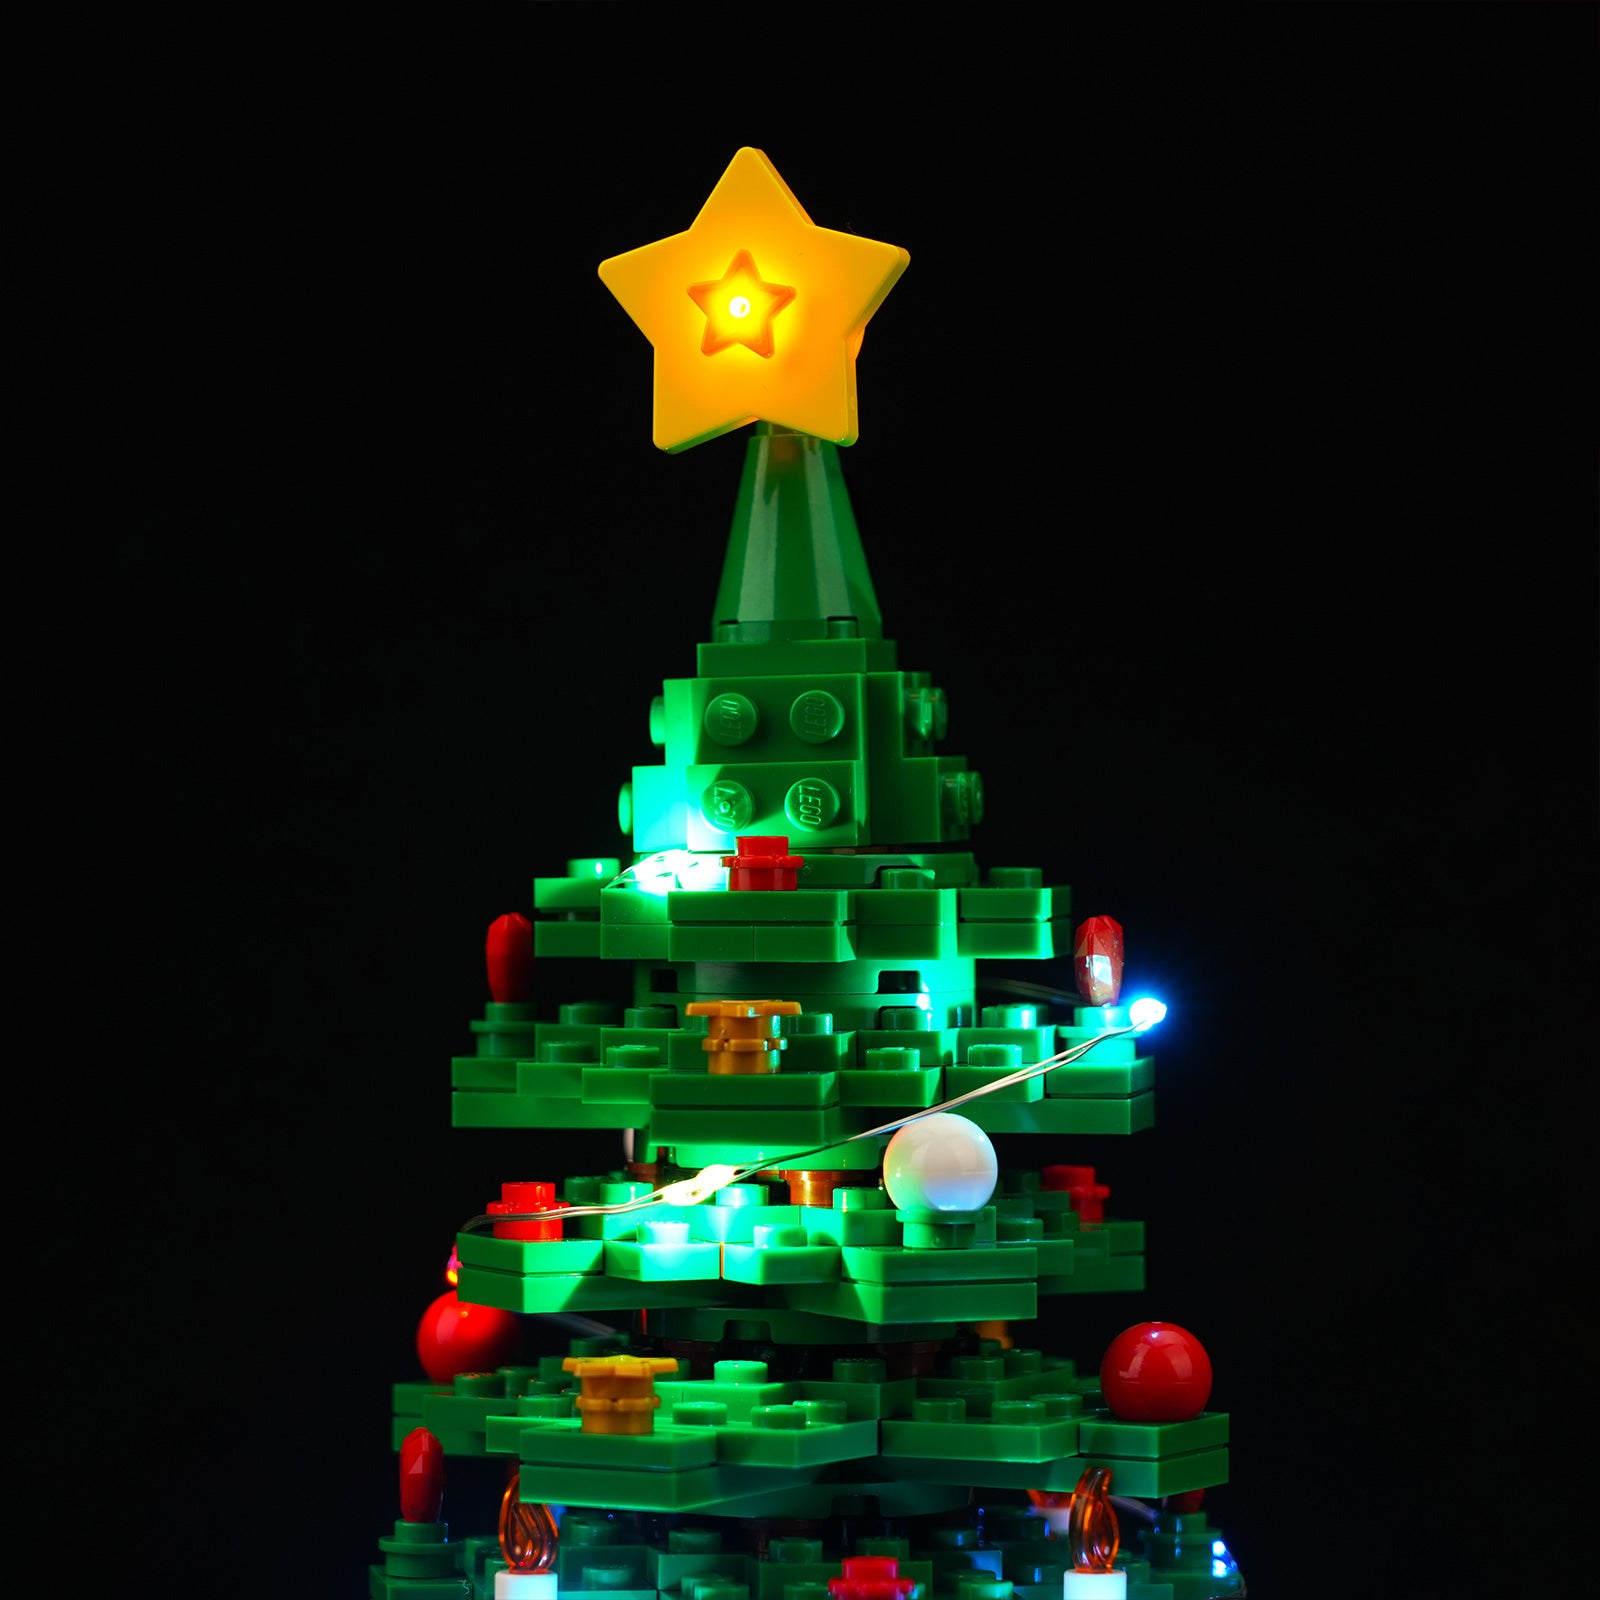 LEGO Christmas Tree (40573) building kit